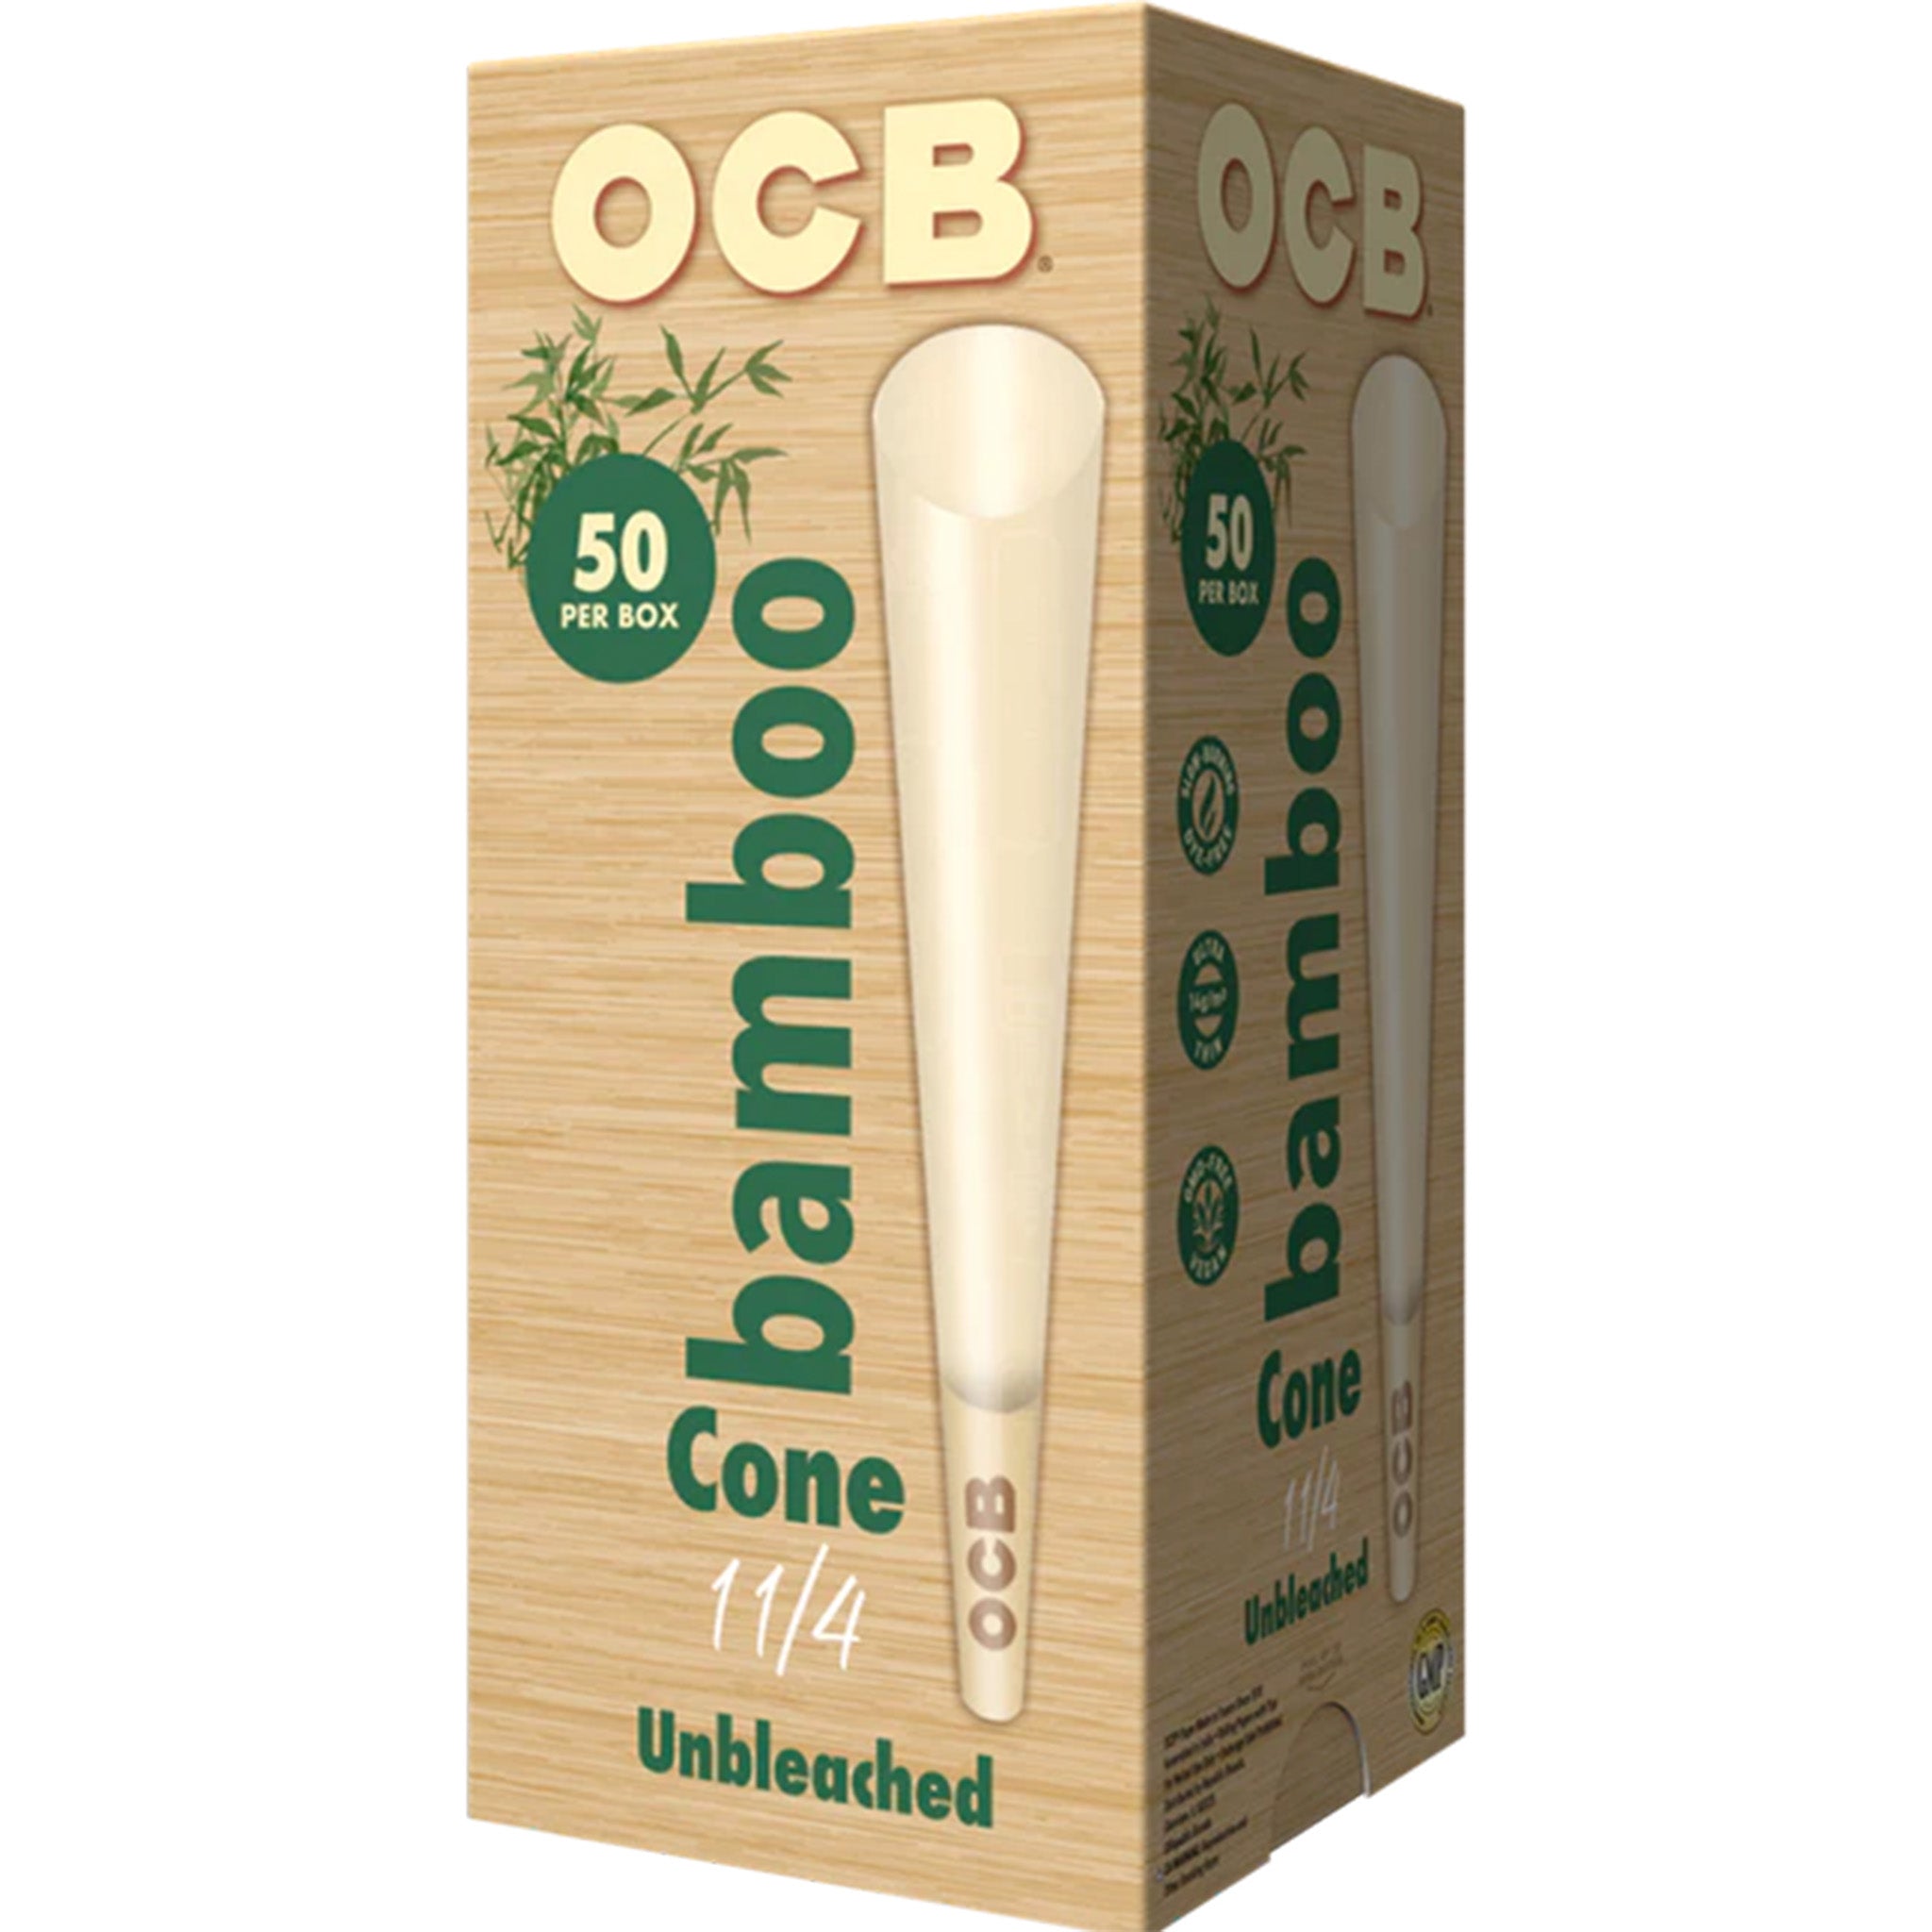 OCB Bamboo 1 1/4 Cones Large Box Cone OCB 50 